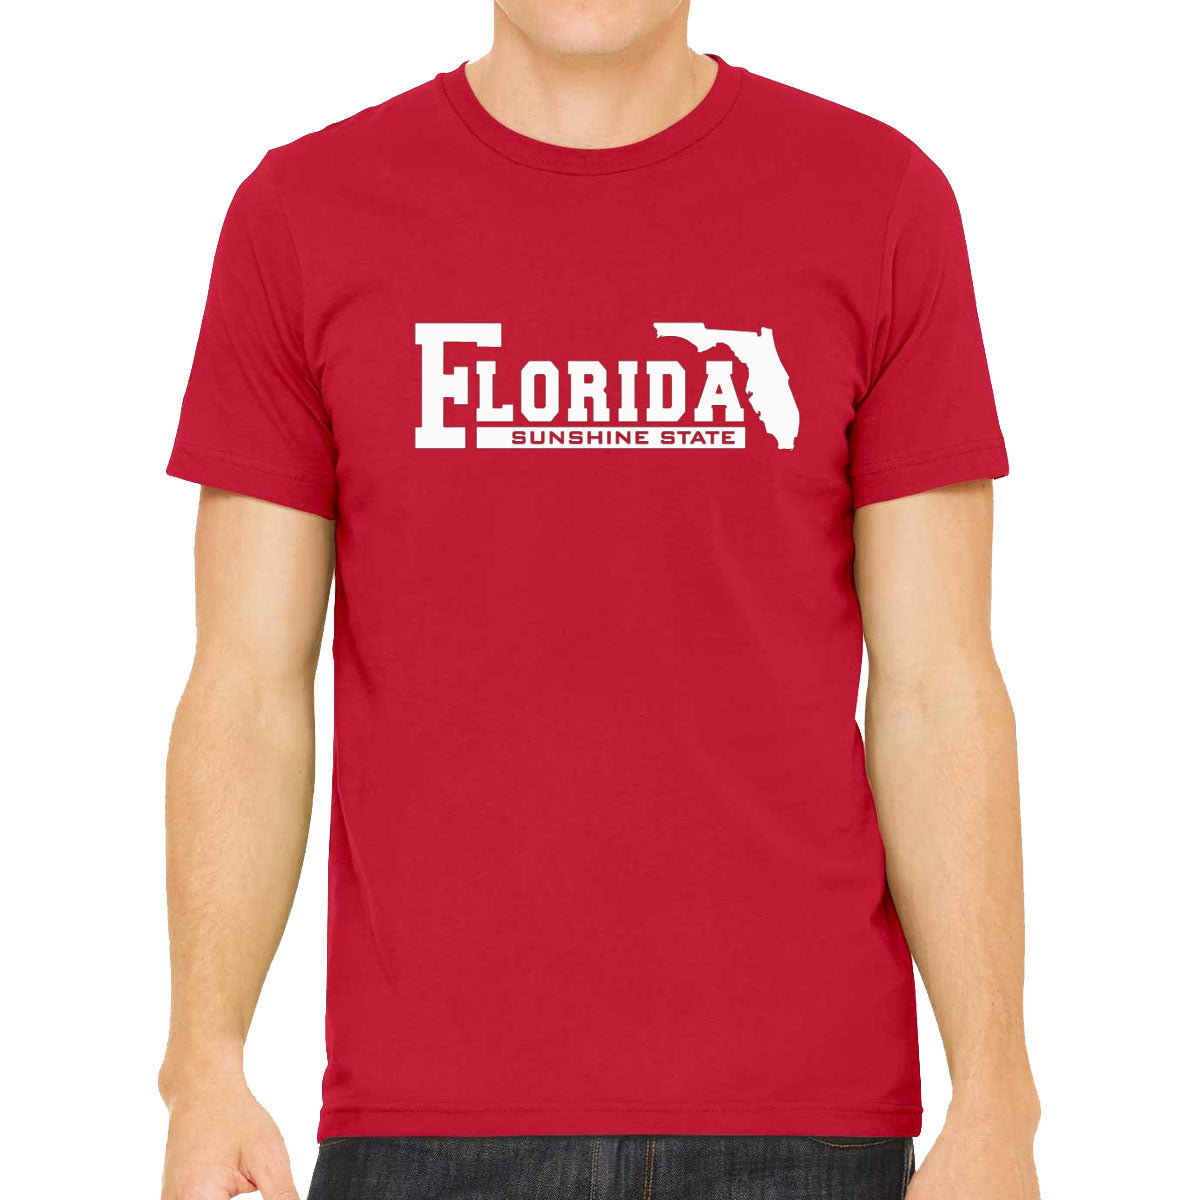 Florida Sunshine State Men's T-shirt